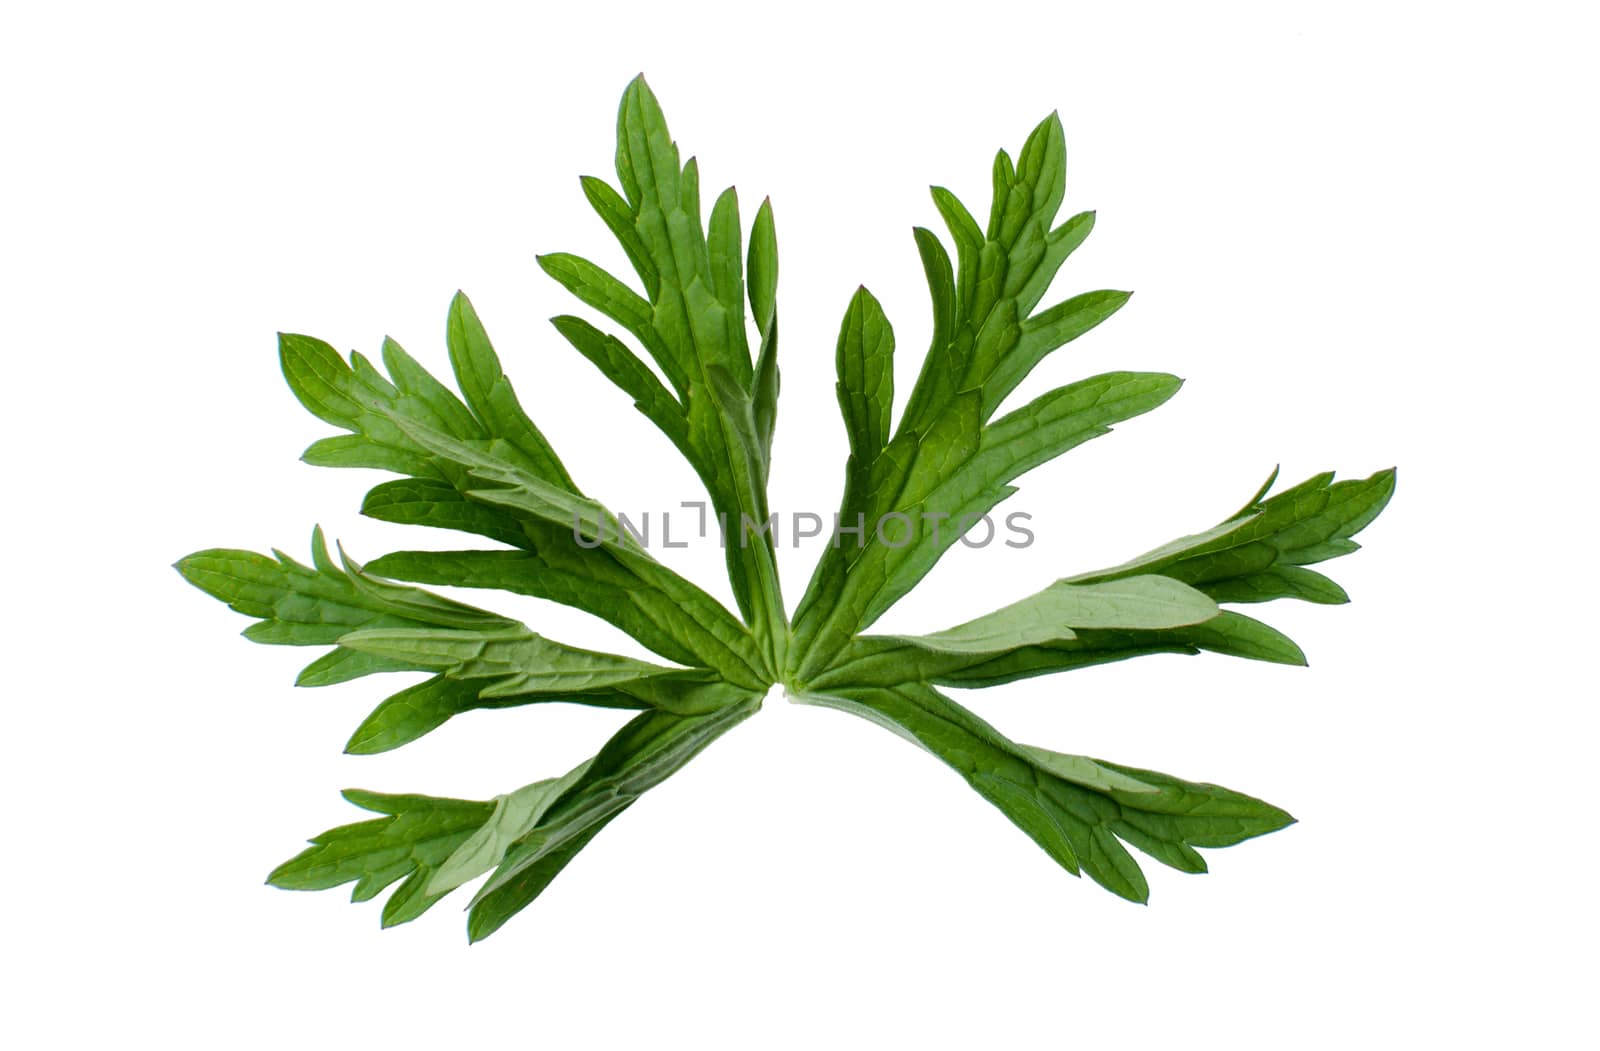 Geranium pratense leaf idolated on white background.